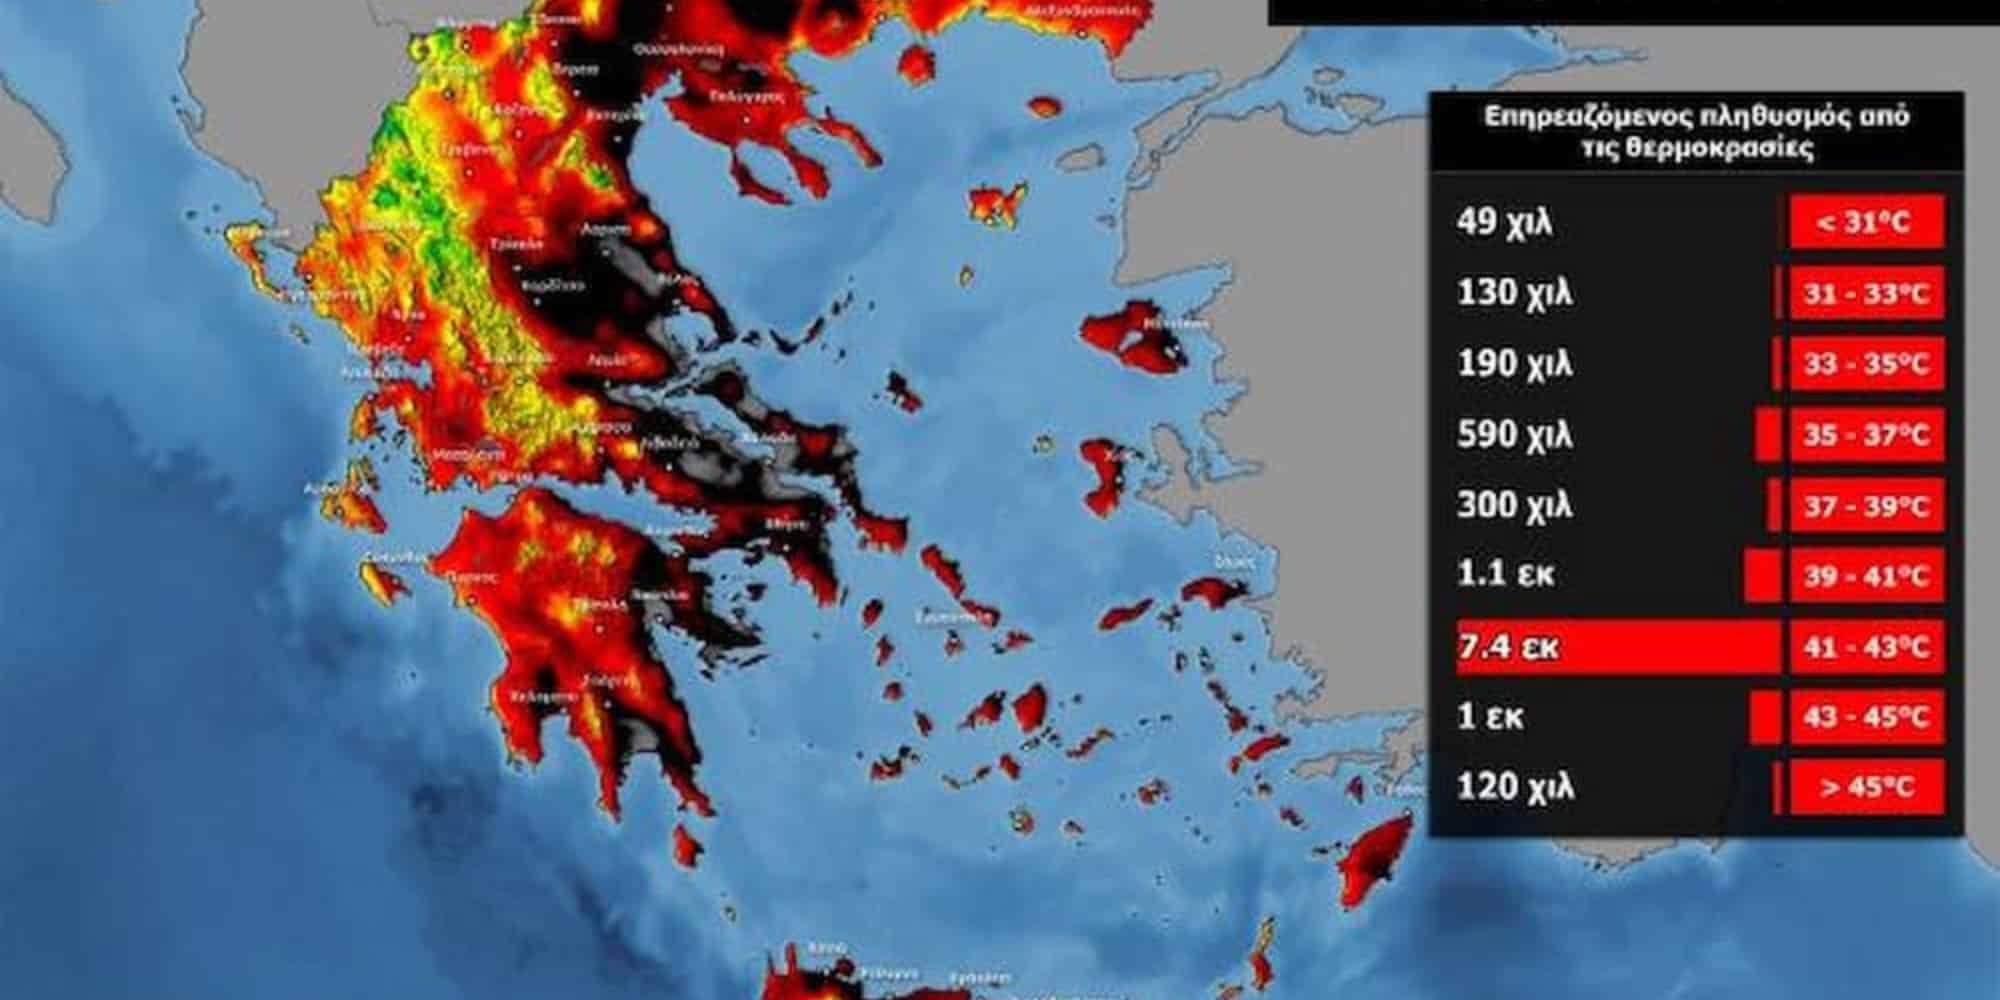 thermokrasies meteo 26 7 23 - Ο καύσωνας «λιώνει» την Ελλάδα: 8,5 εκατομμύρια άνθρωποι σήμερα θα βιώσουν θερμοκρασίες άνω των 41 βαθμών Κελσίου (χάρτες)